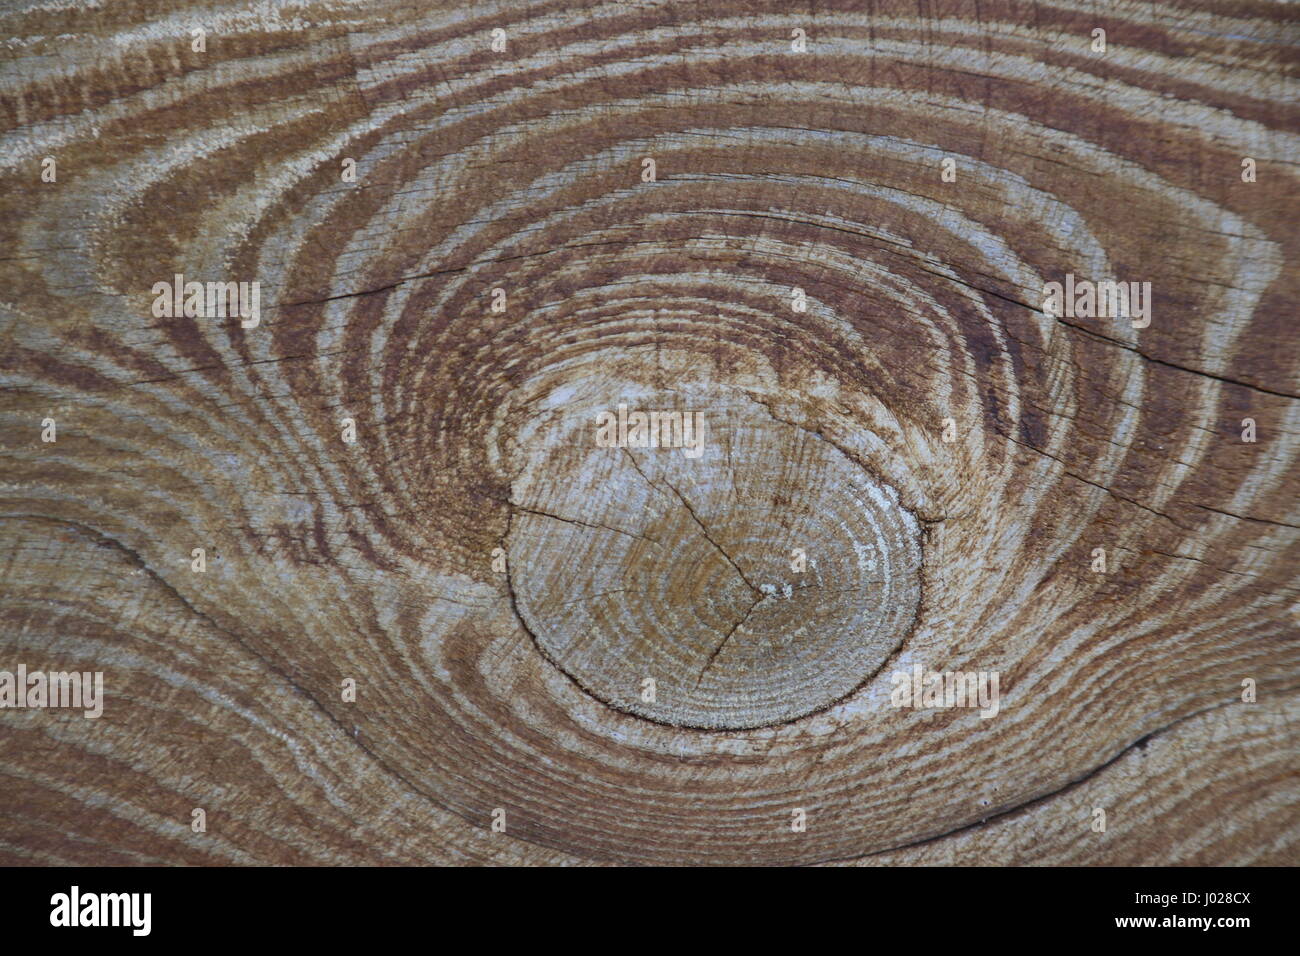 Holz Struktur mit knothole - Hintergrund Stockfoto